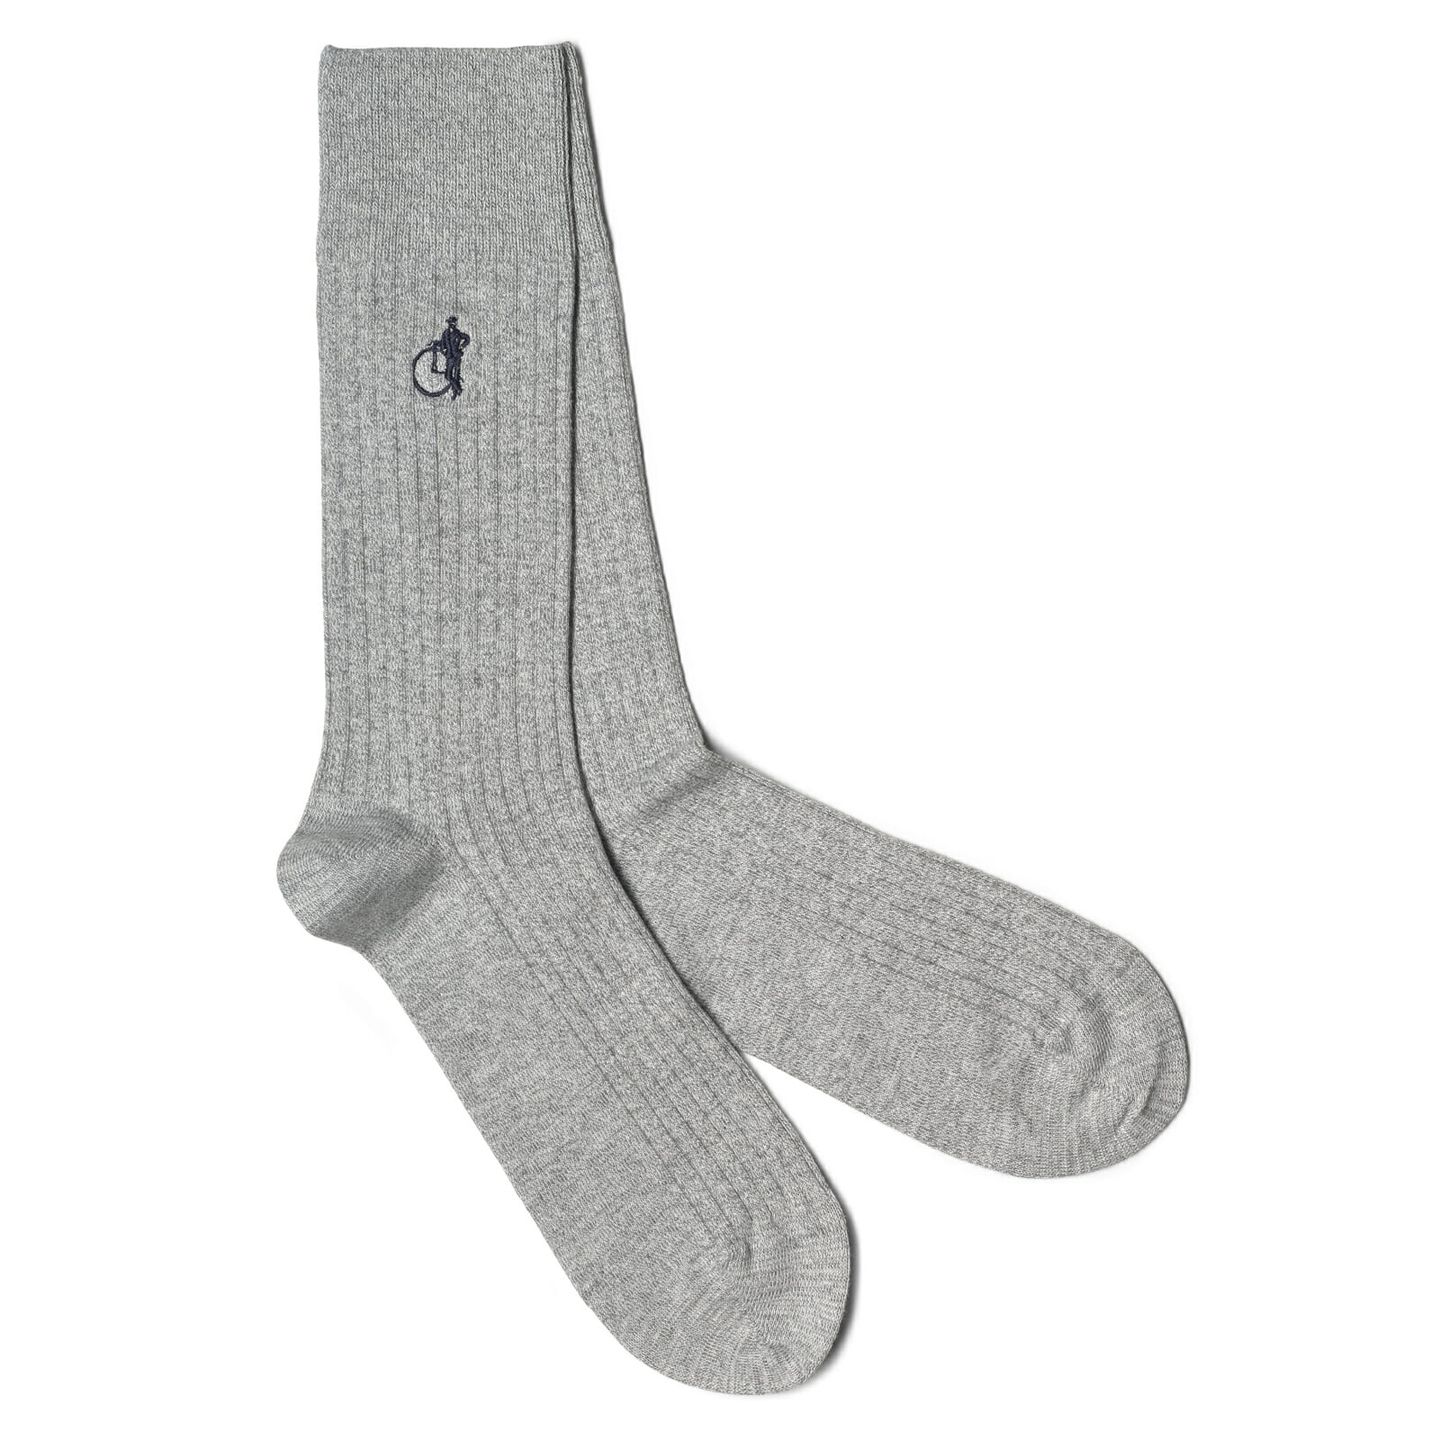 A pair of light grey socks